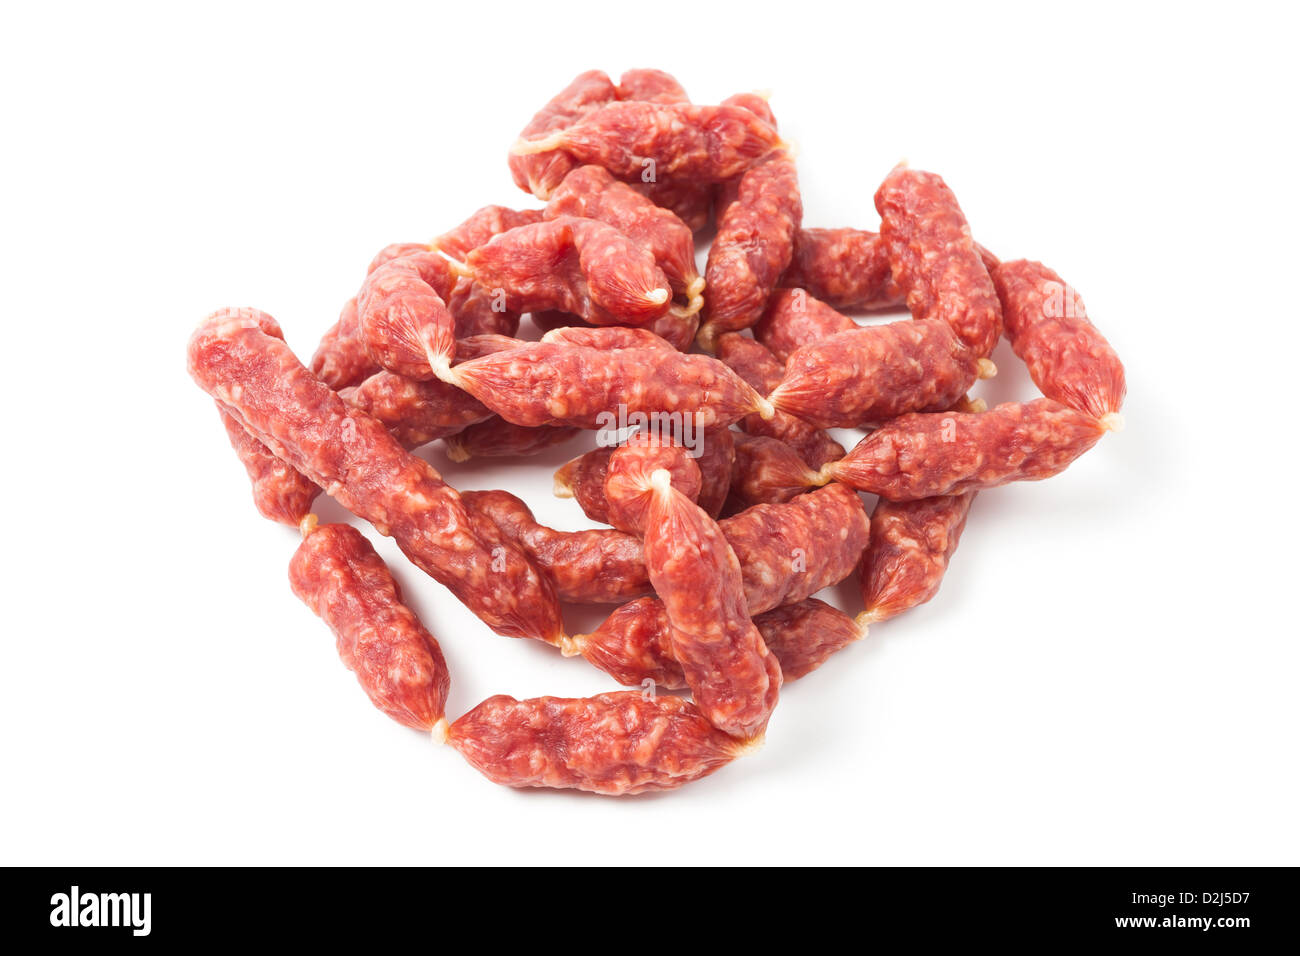 Mini sausages on white background Stock Photo